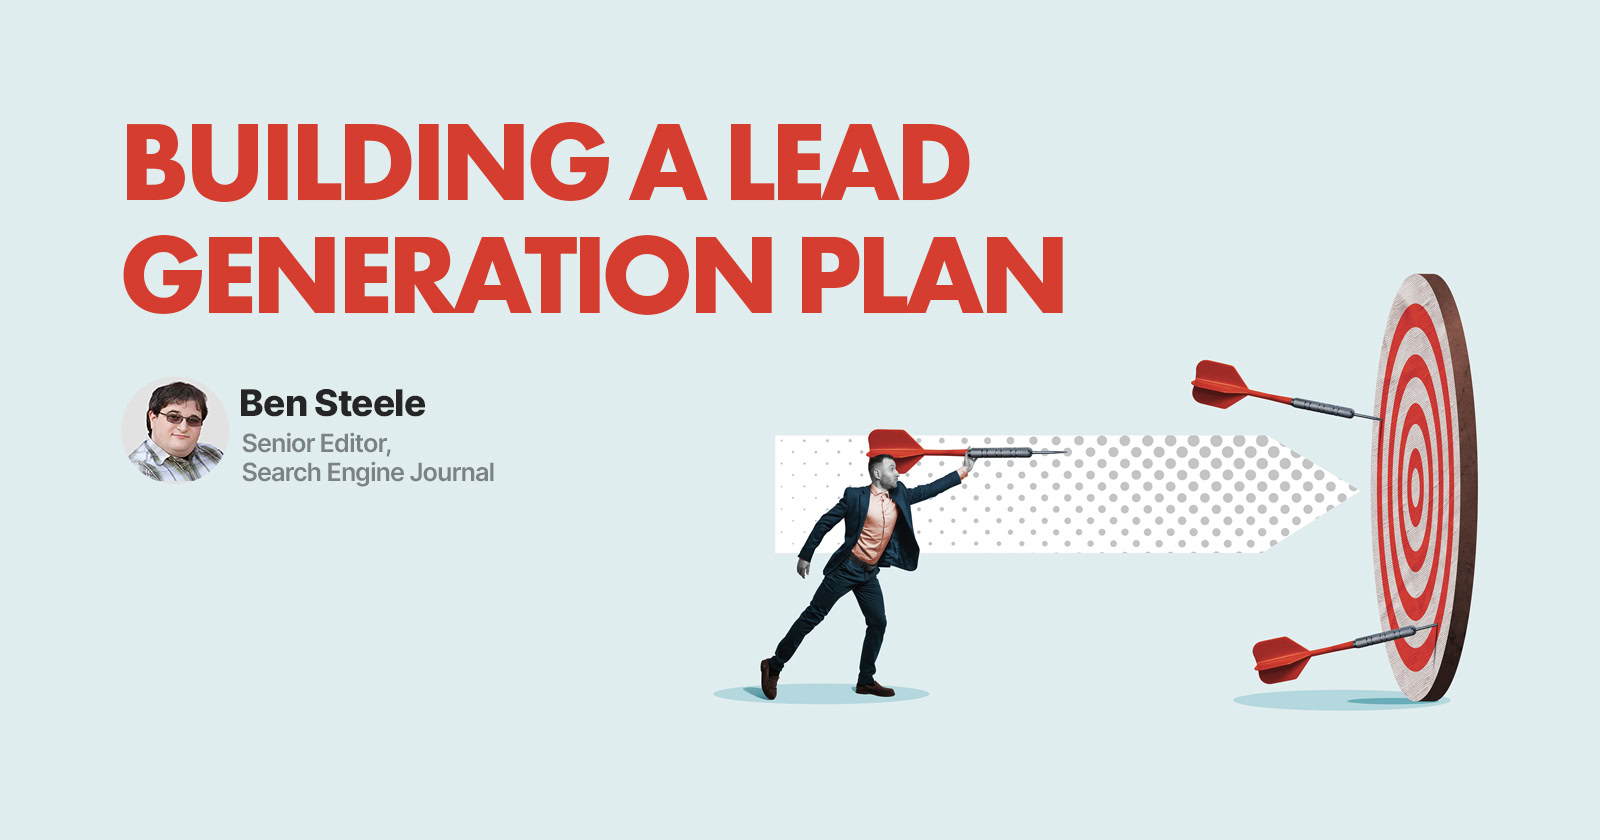 Building a lead generation plan